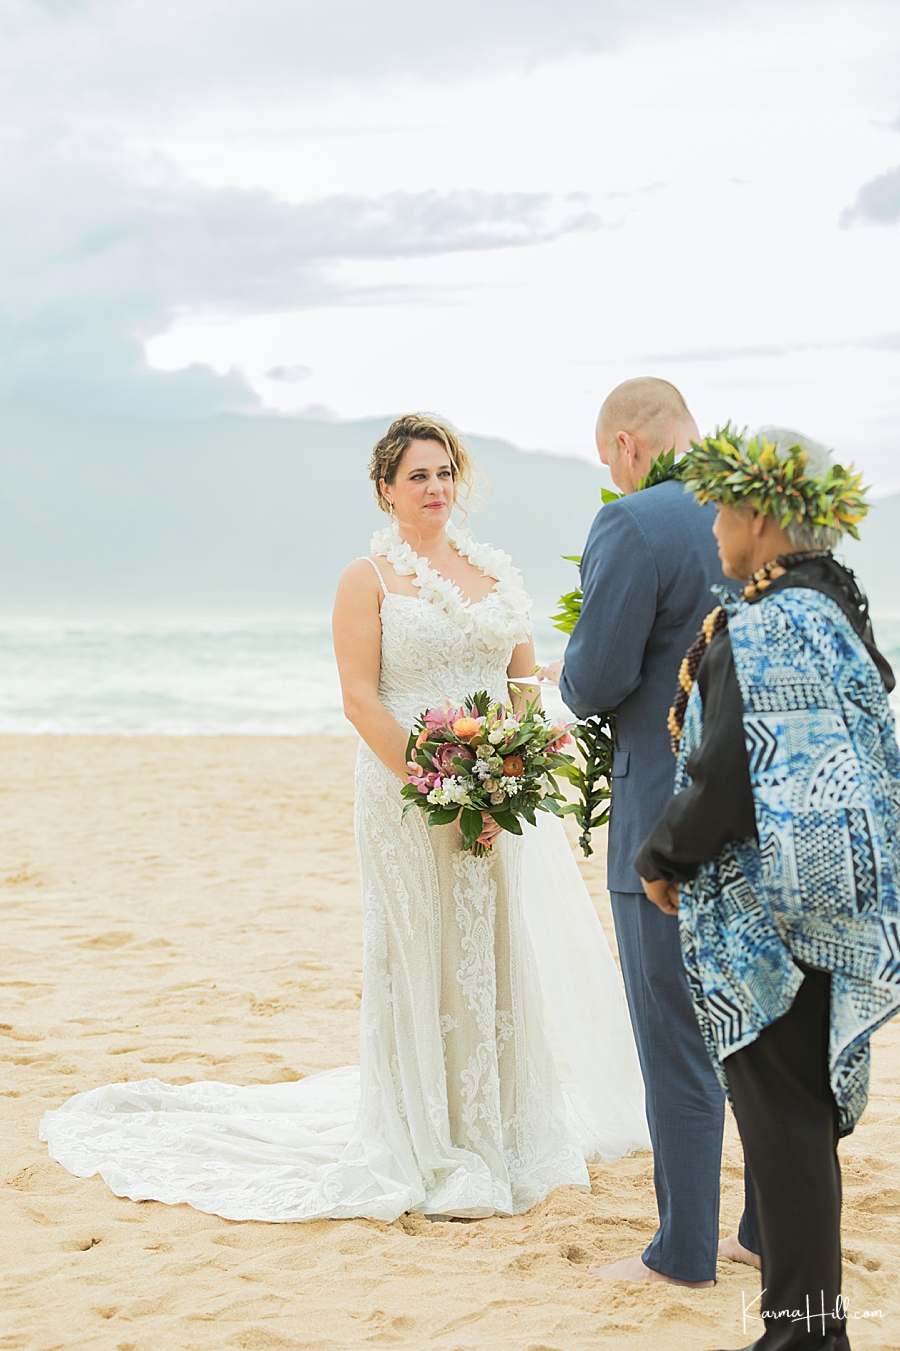 bridal looks for maui beach wedding